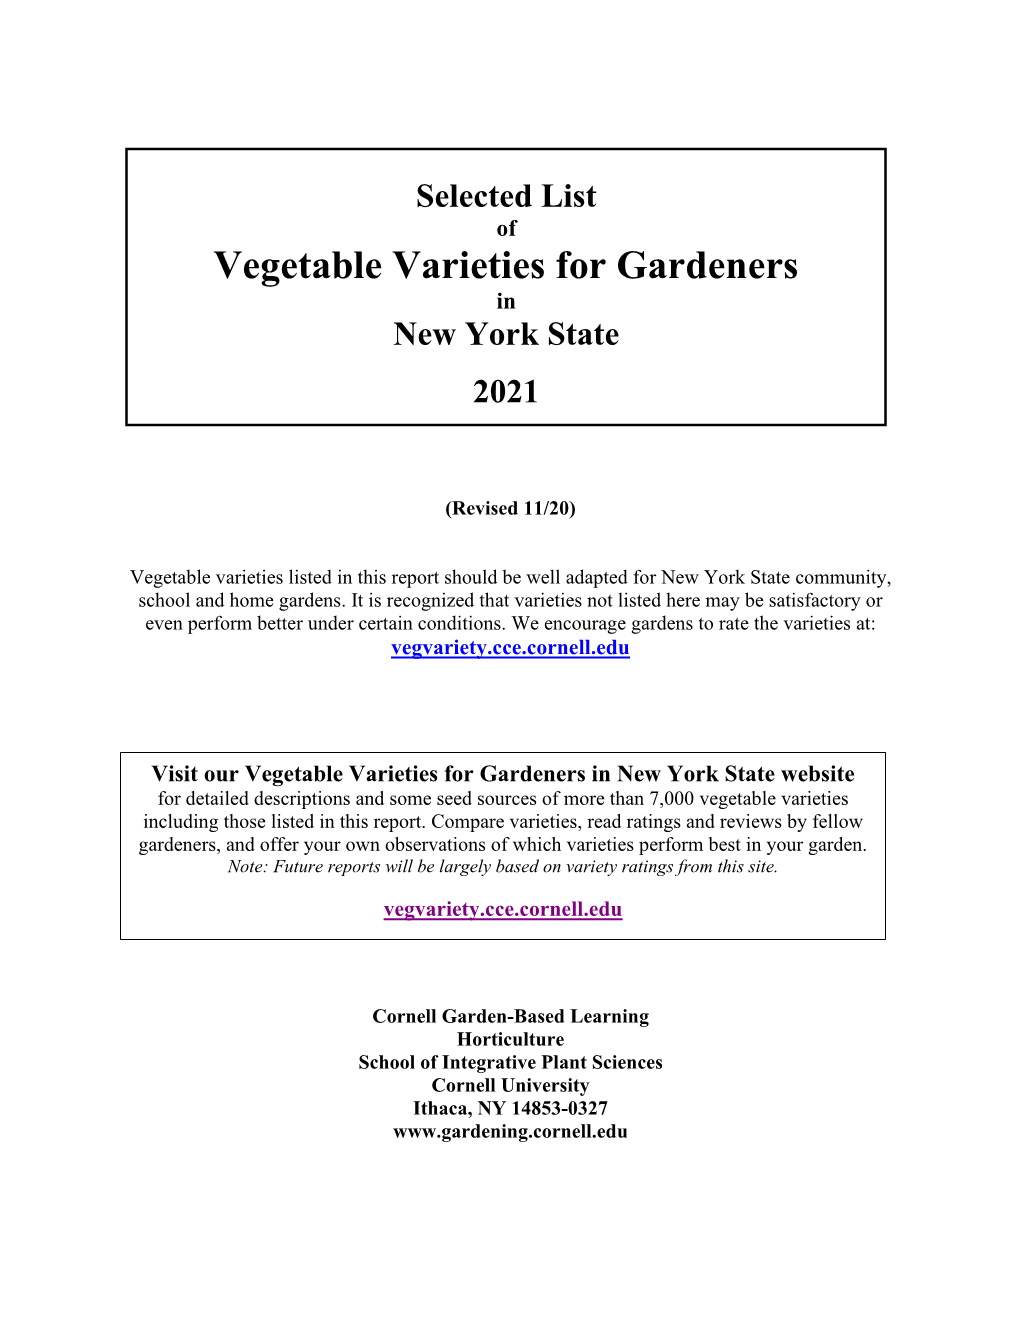 Selected List of Vegetable Varieties for Gardeners in New York State